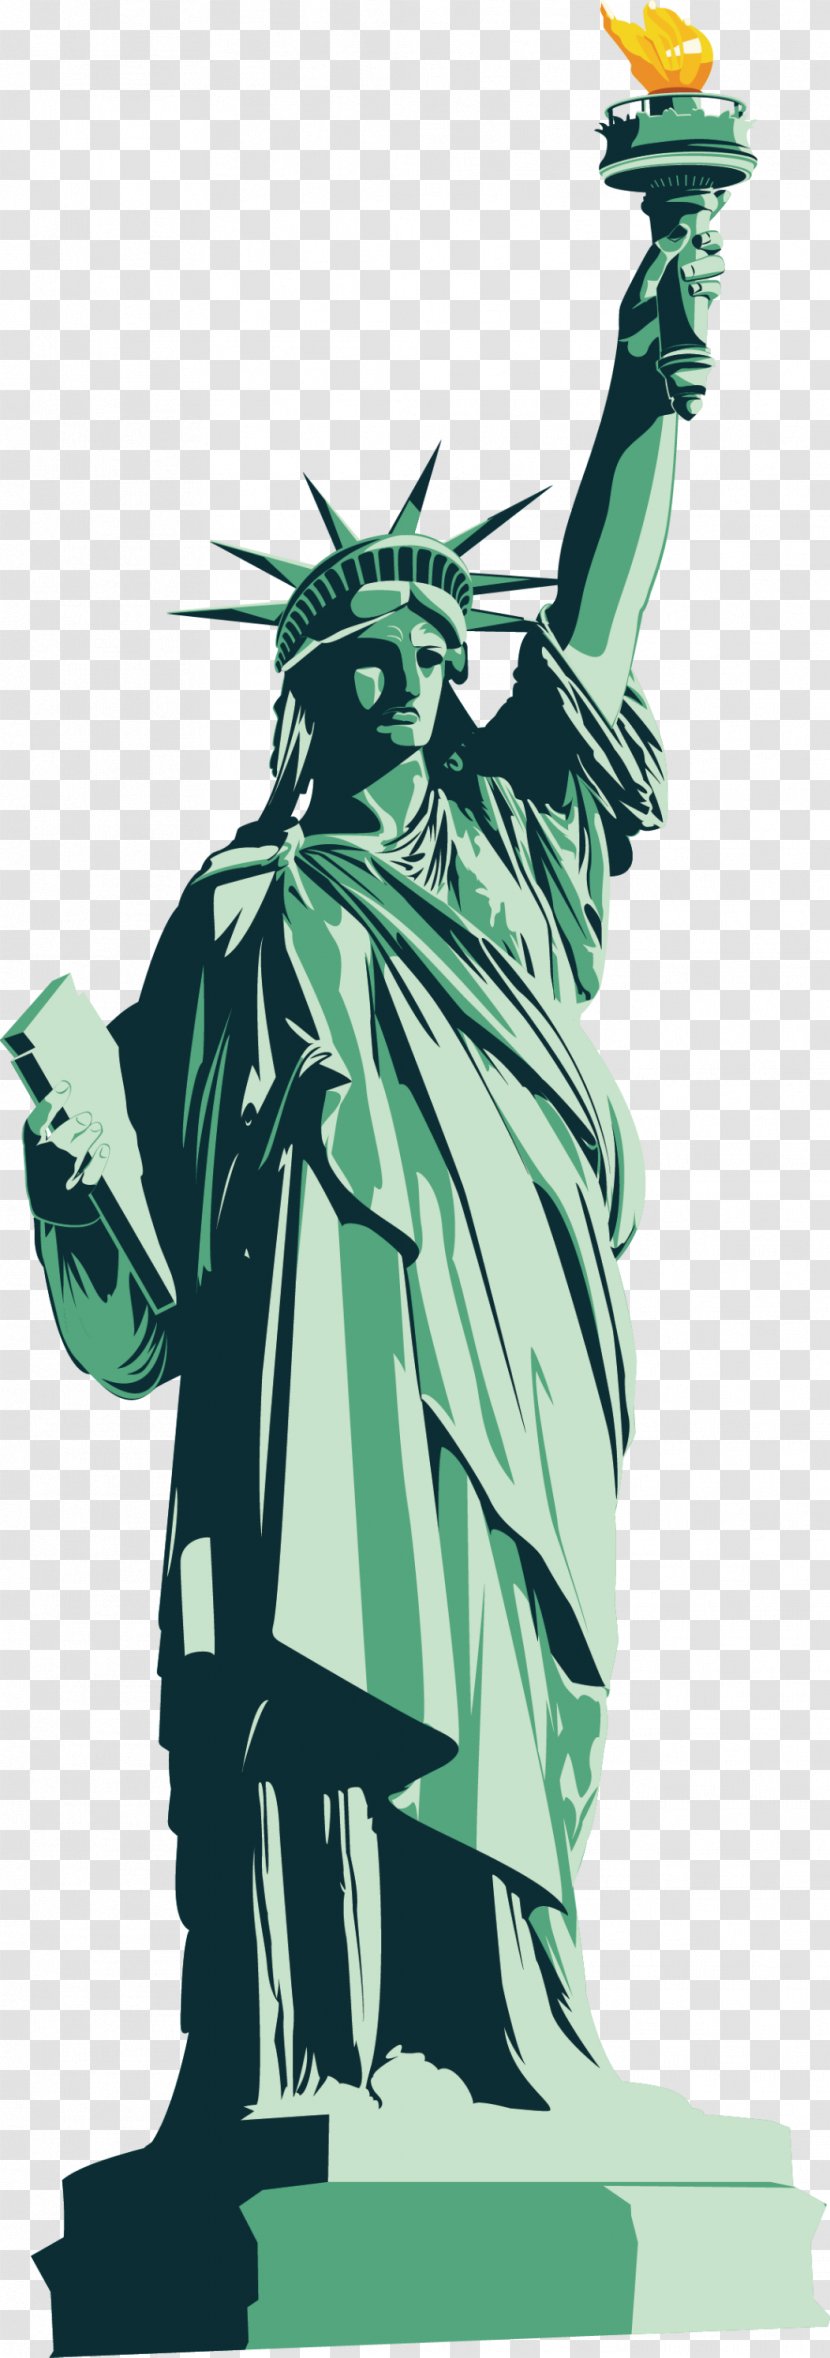 Statue Of Liberty National Monument Vector Graphics Image Illustration - Art - Sculpture Transparent PNG